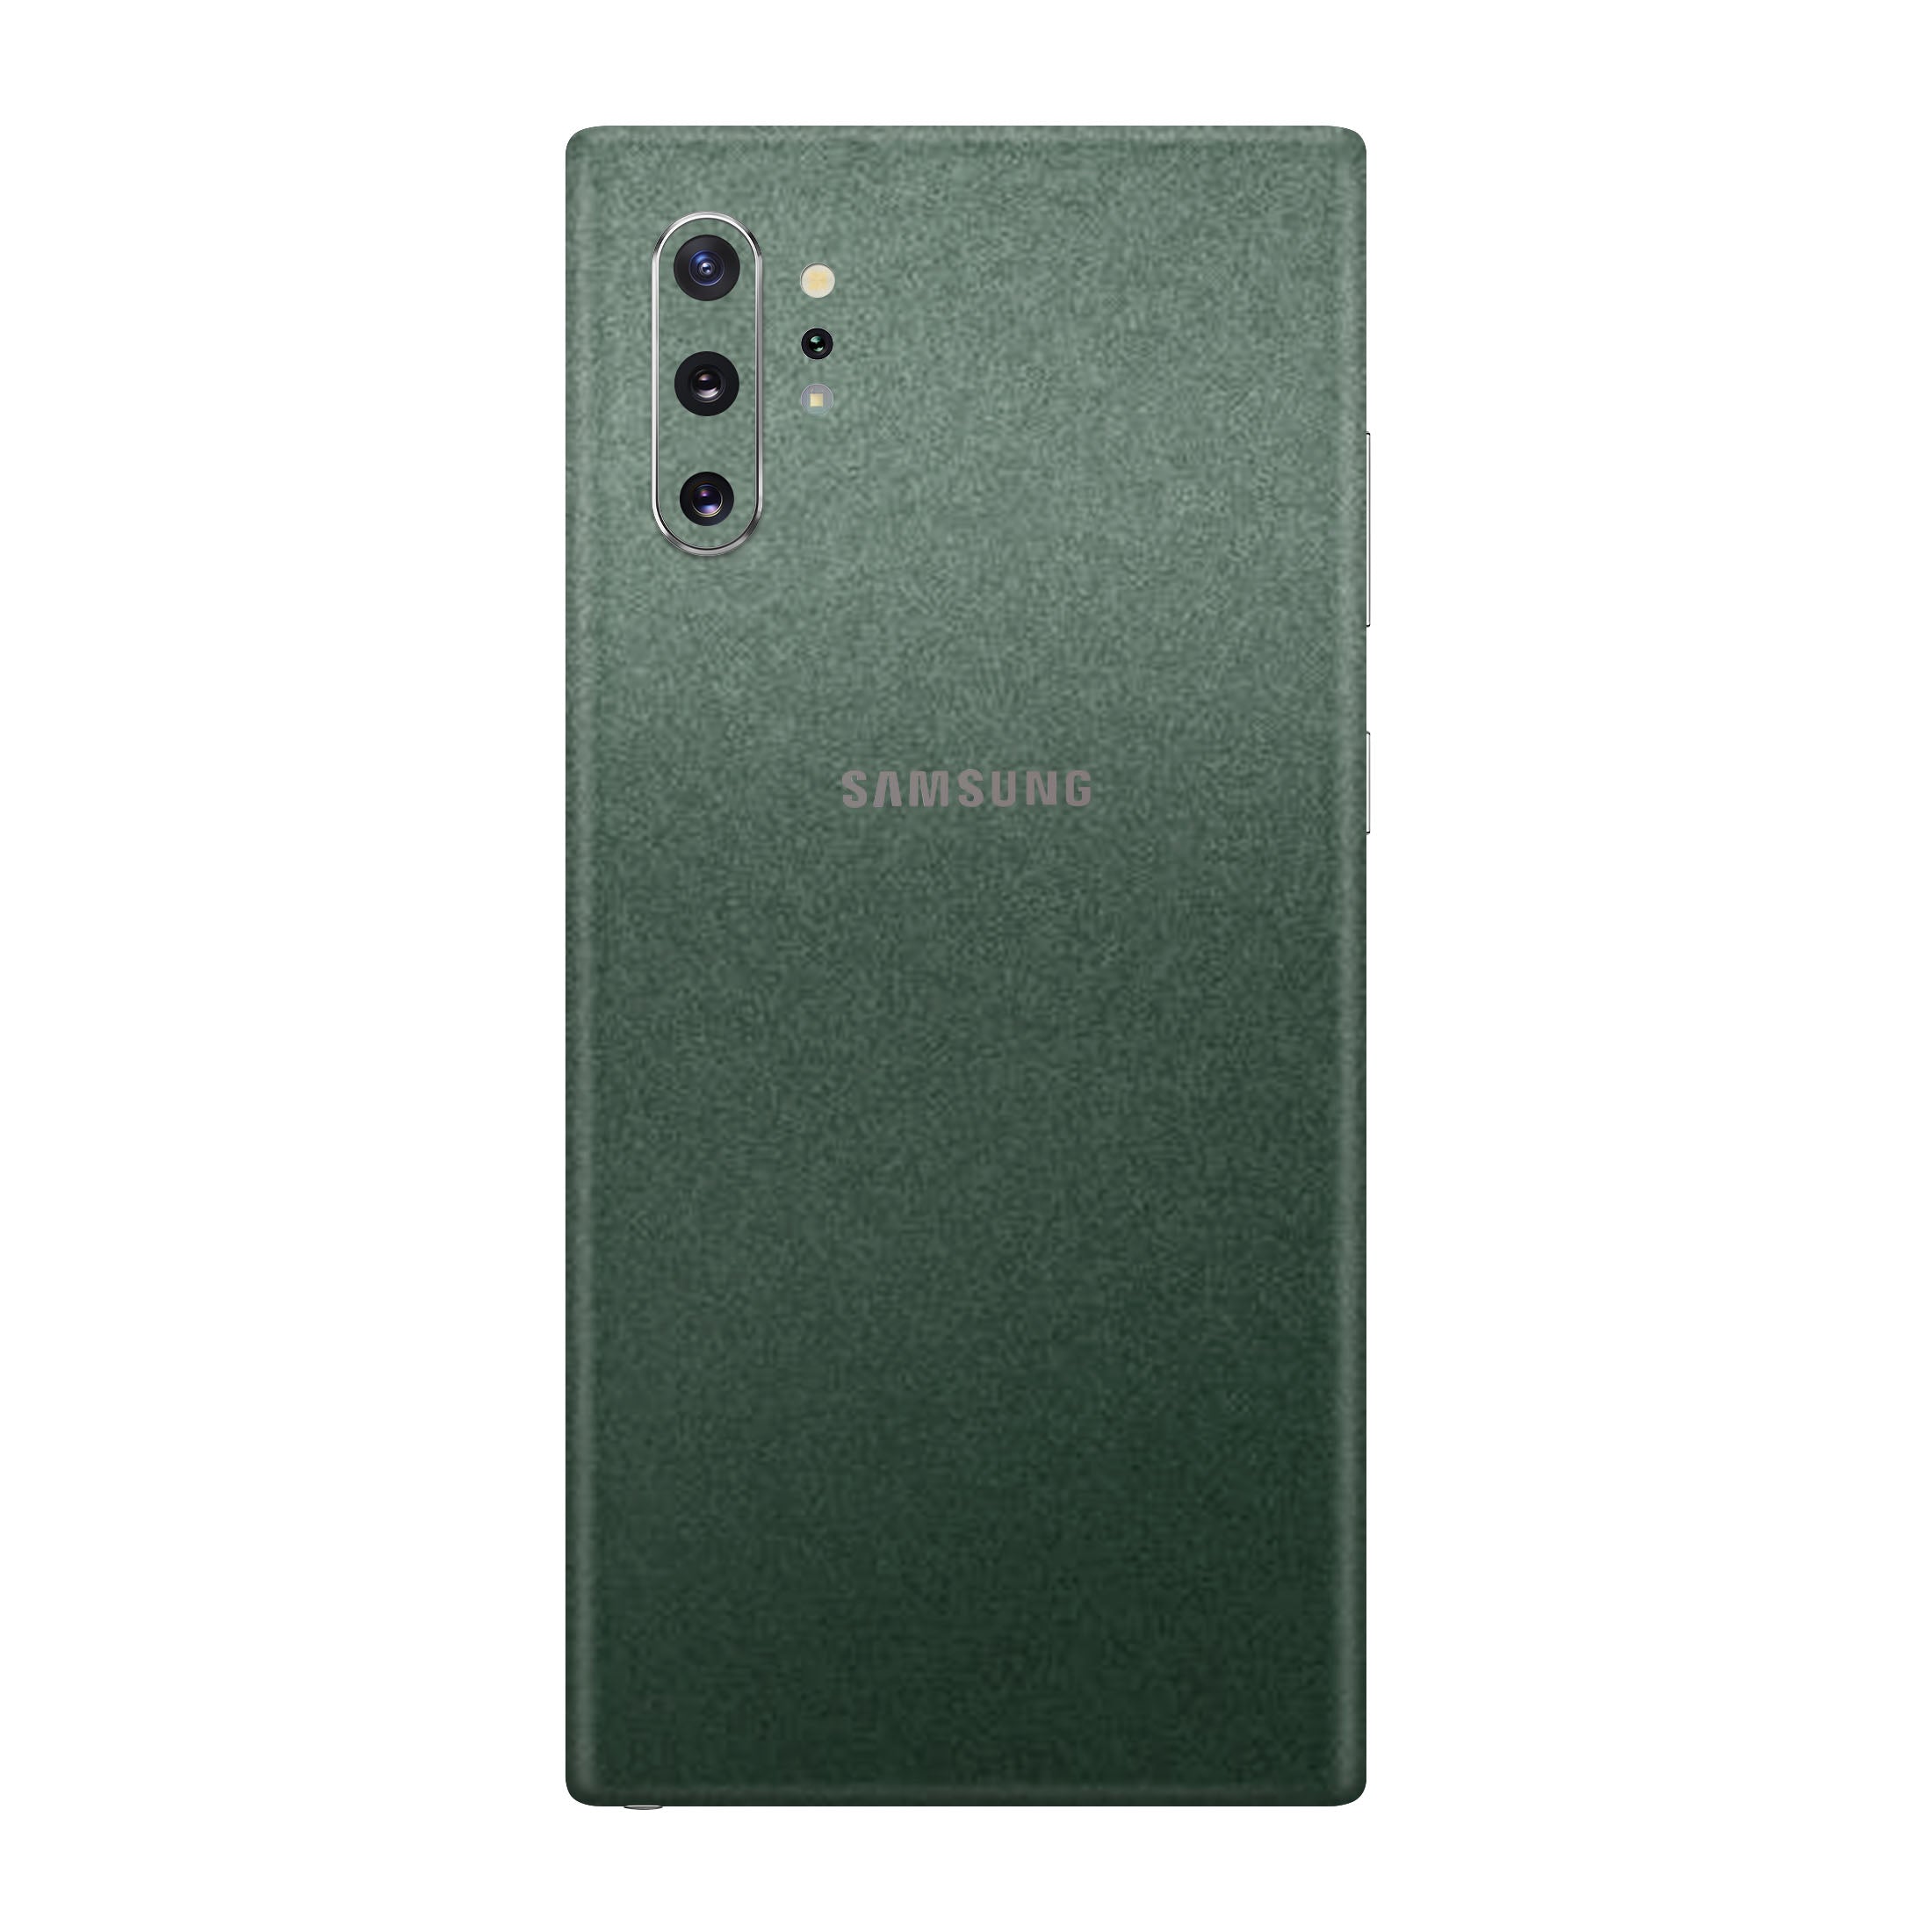 Pine Green Metallic Skin for Samsung Note 10 Plus